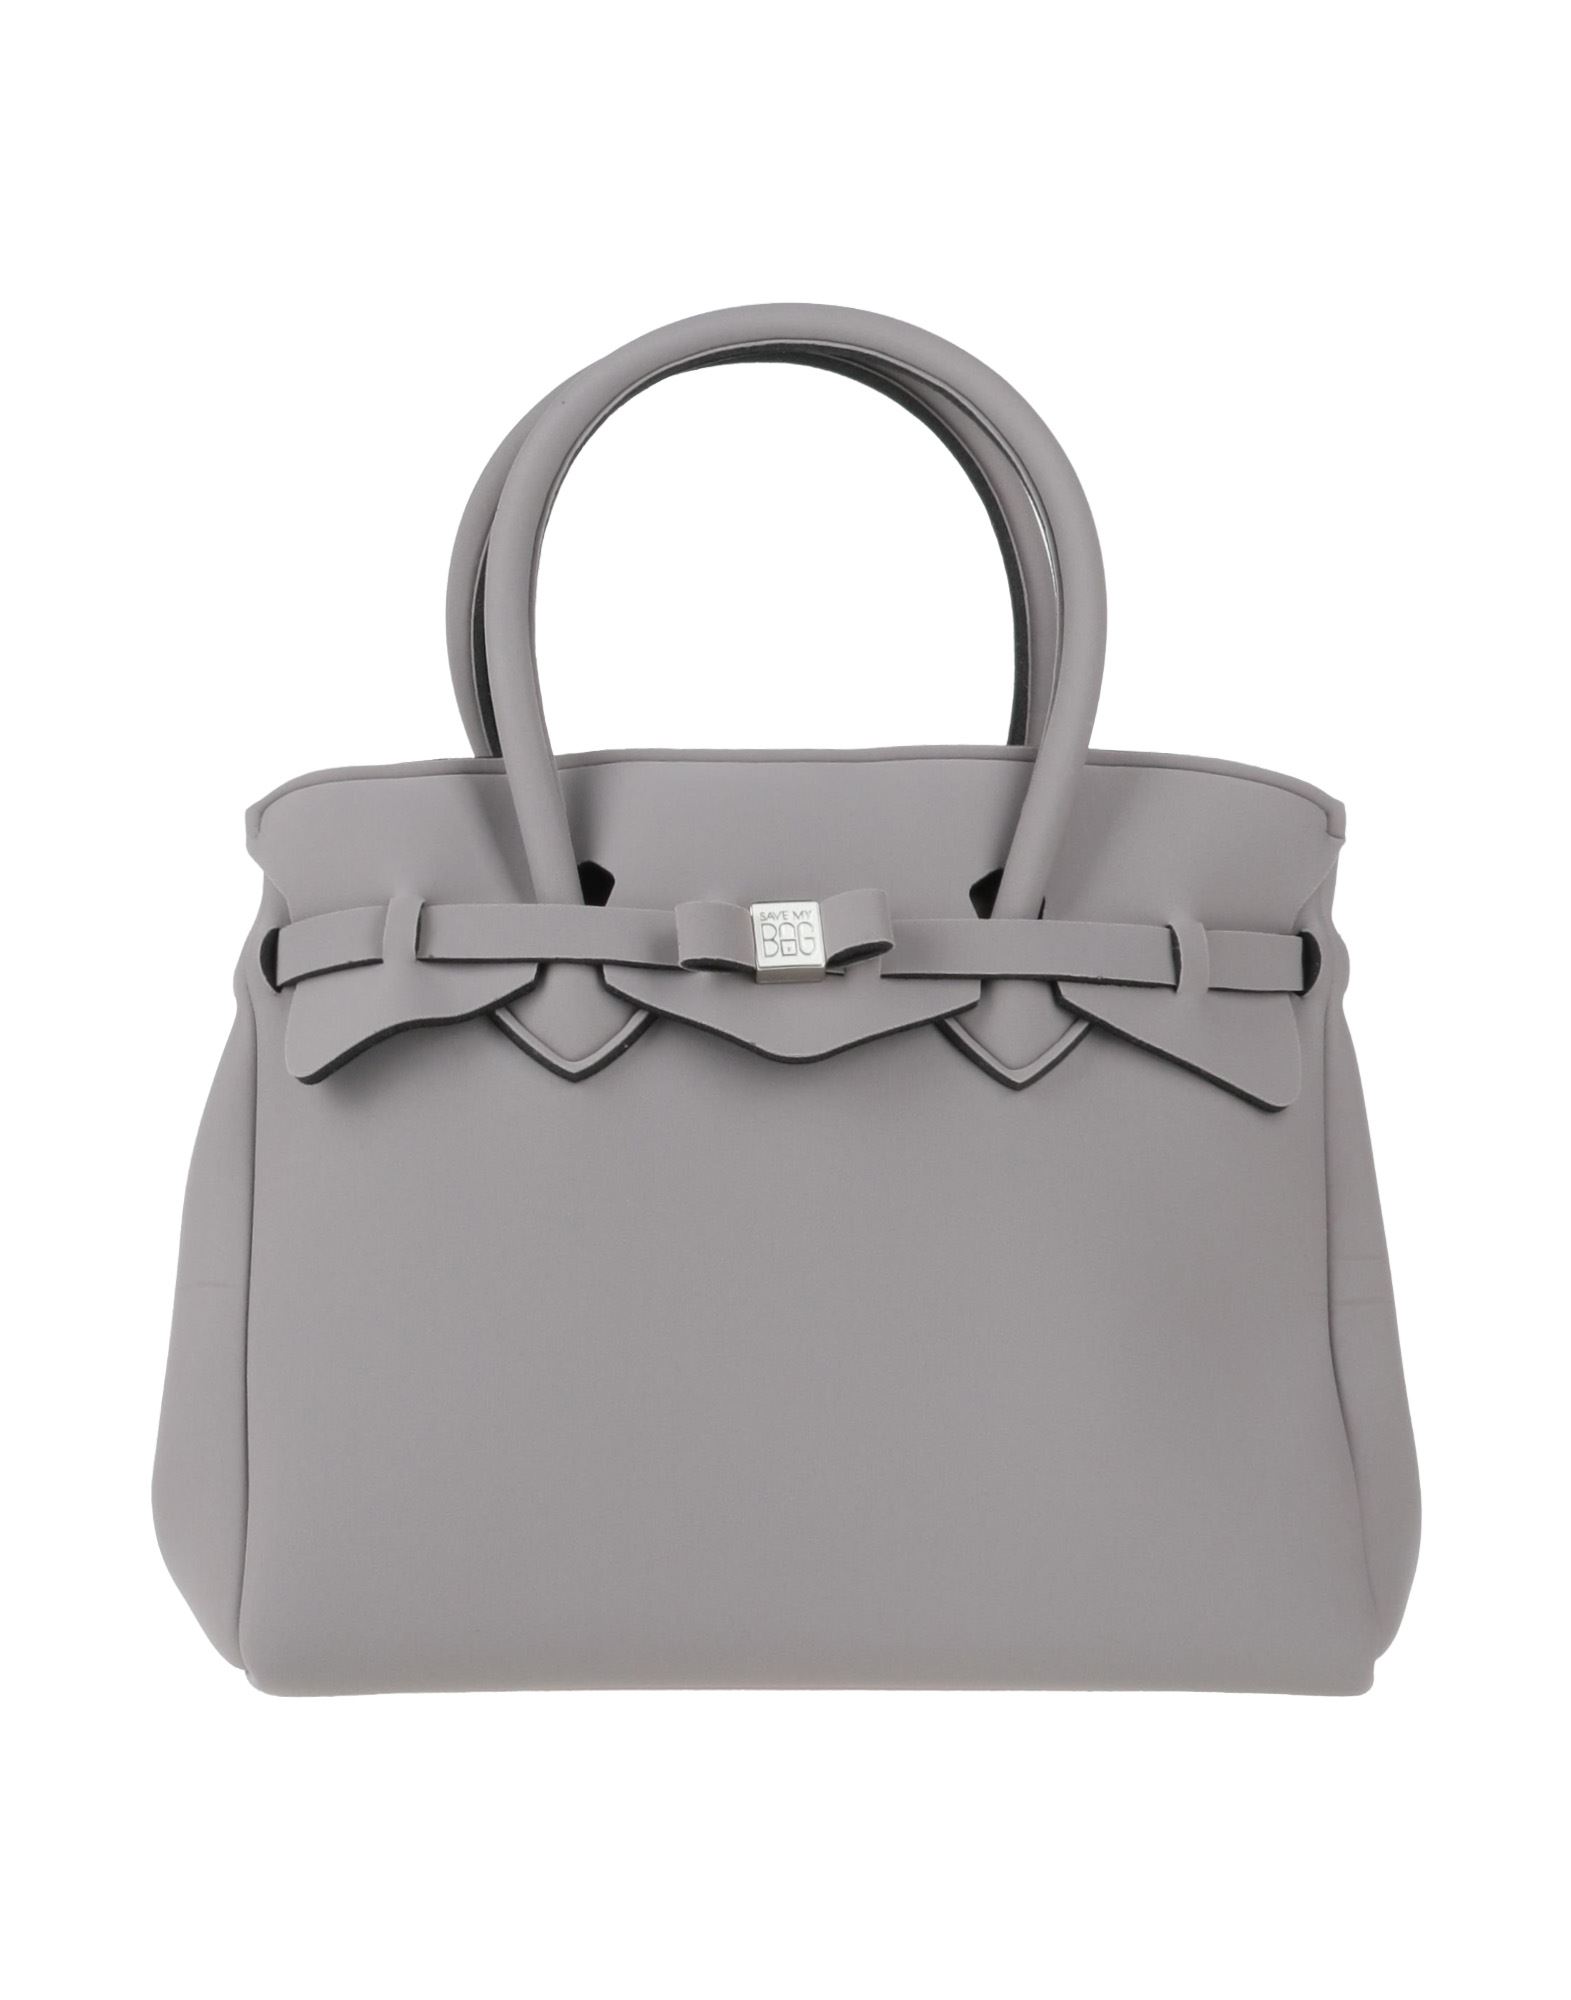 Save My Bag Handbags In Grey